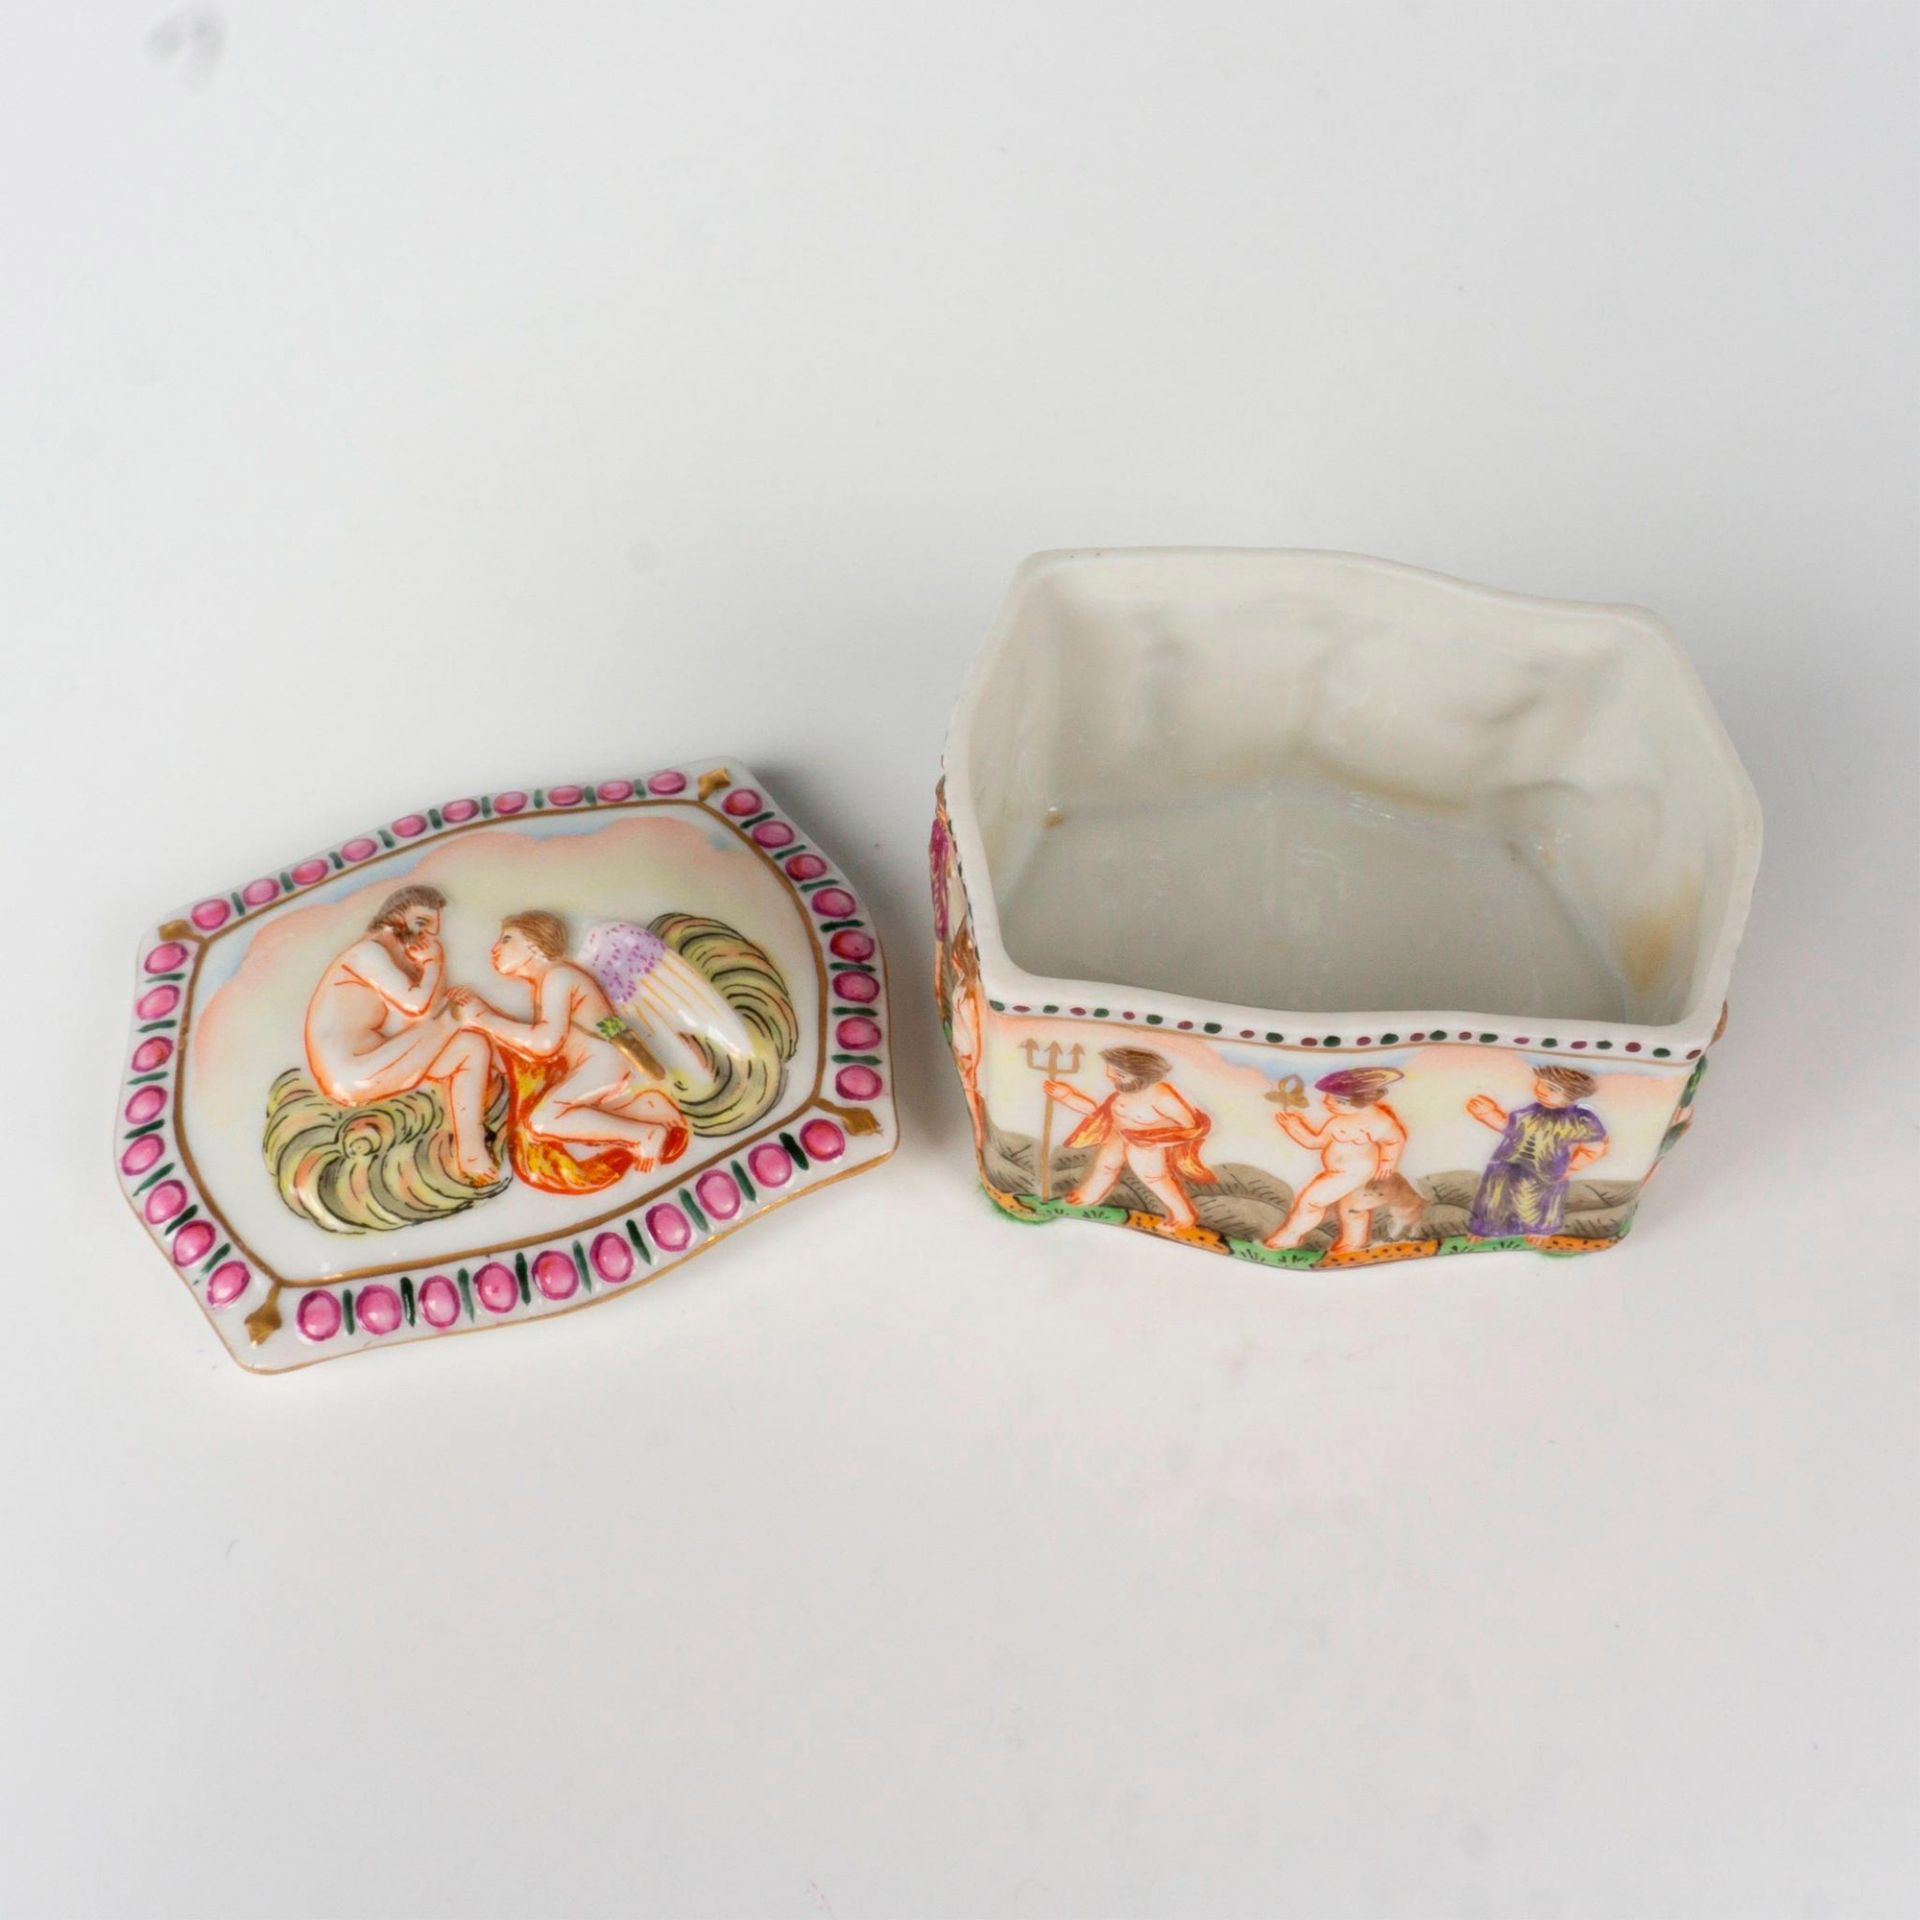 Capodimonte Porcelain Lidded Trinket Box - Image 3 of 8